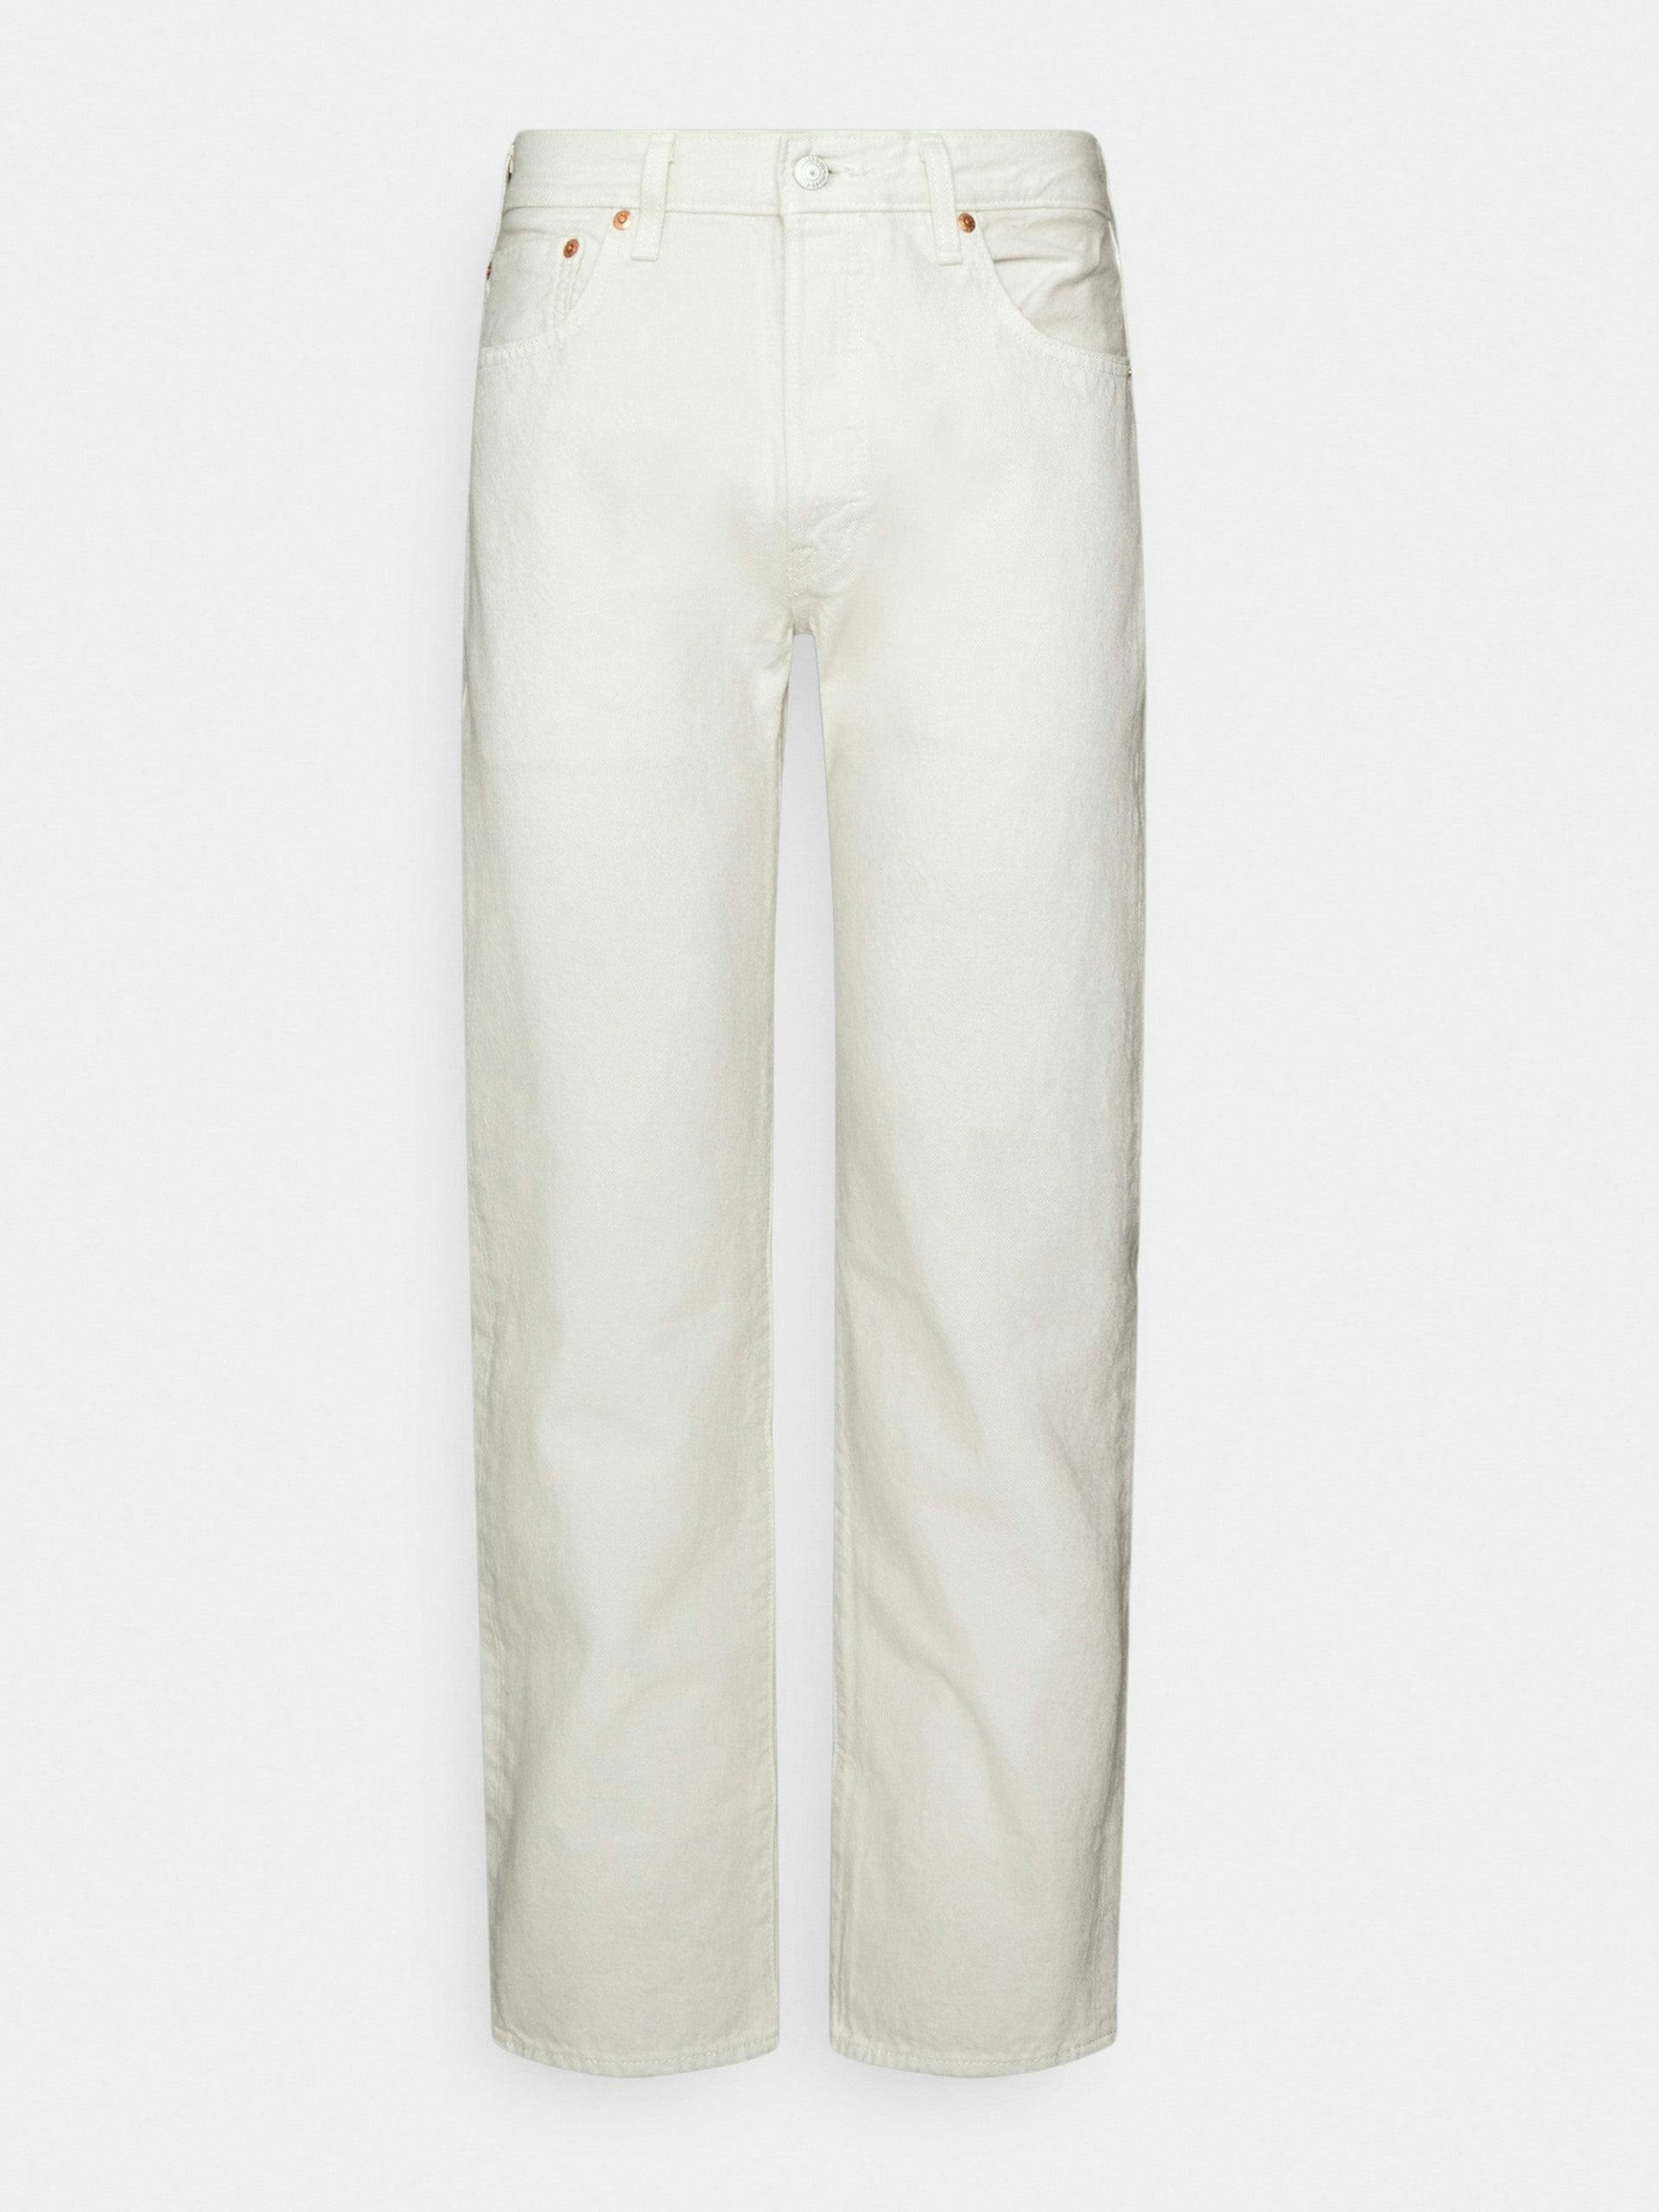 Orignial 501 white jeans